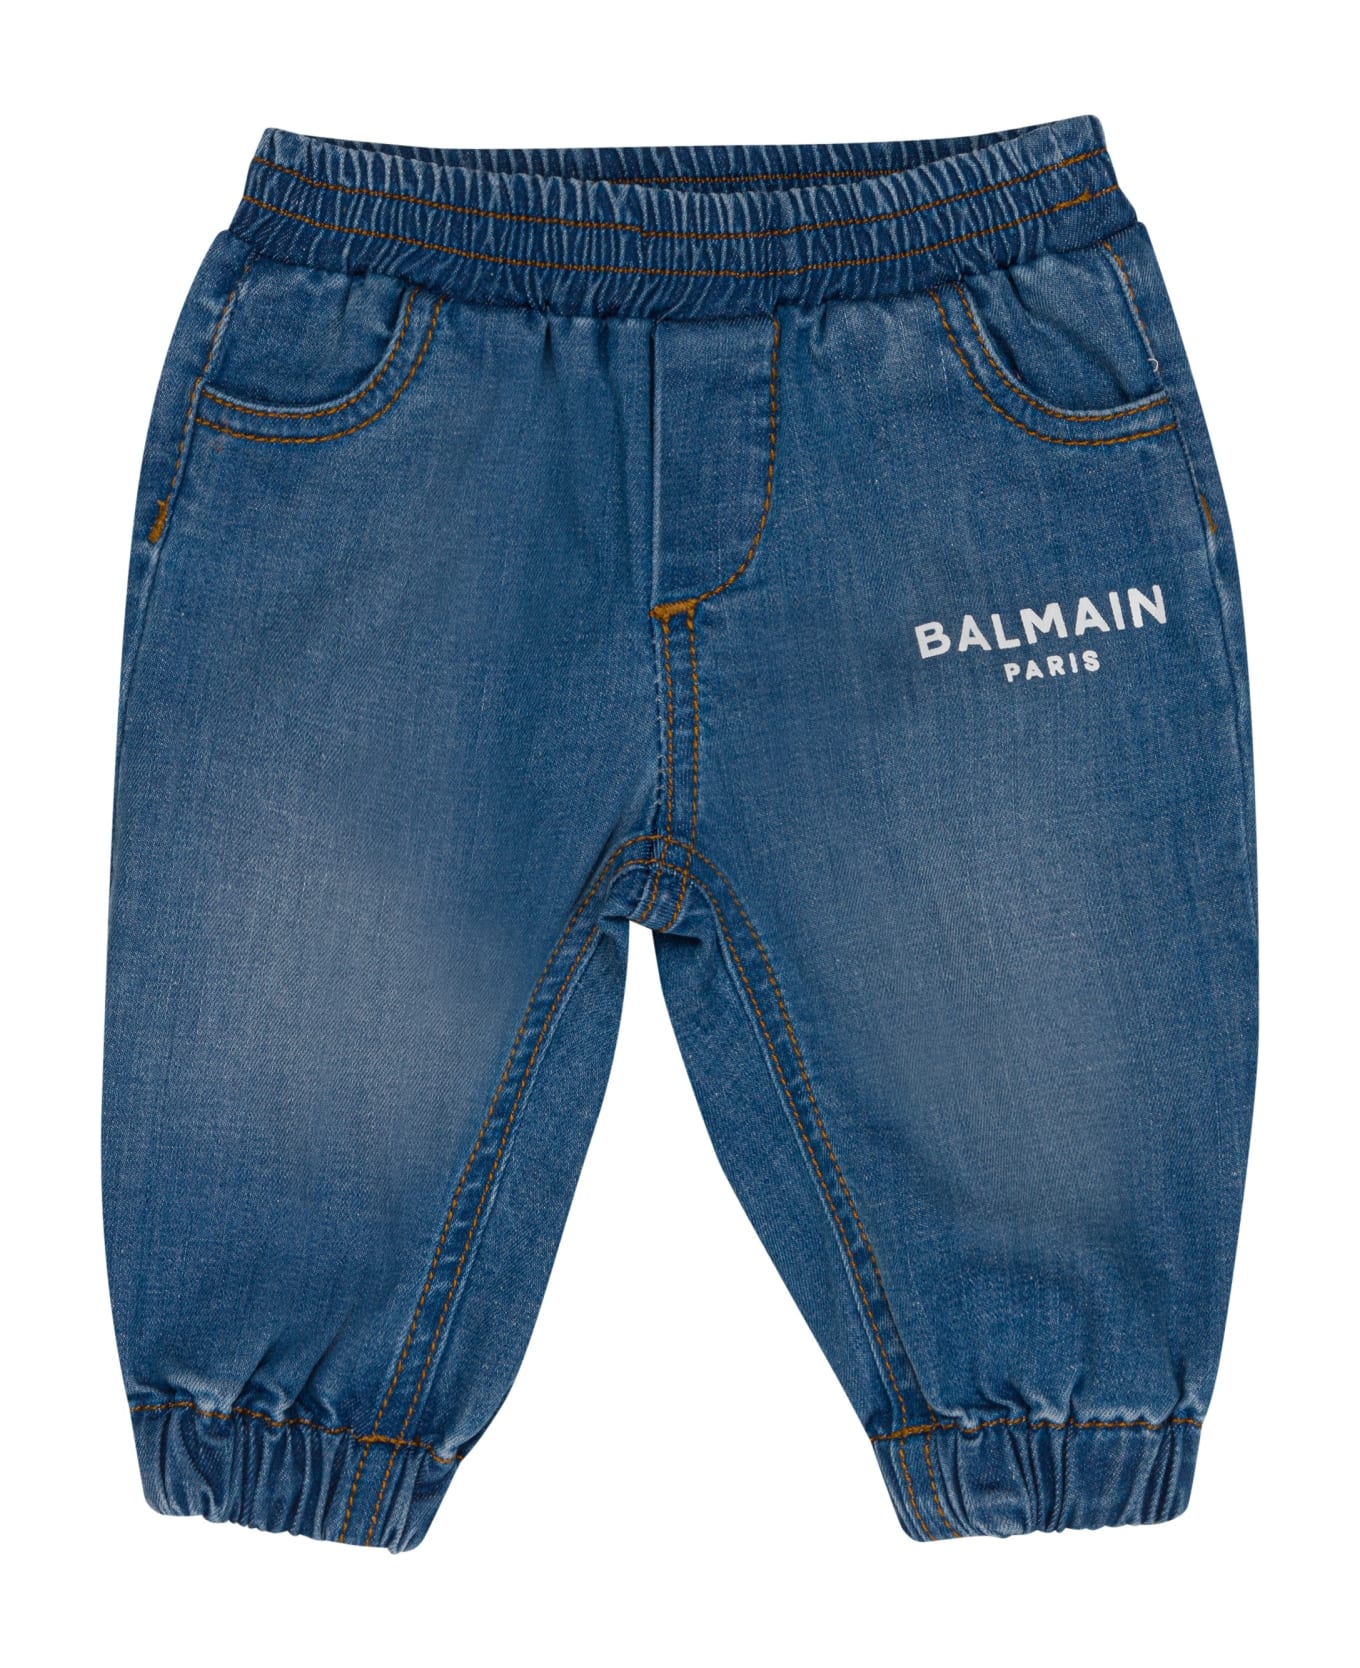 Balmain Jeans Neonato ボトムス